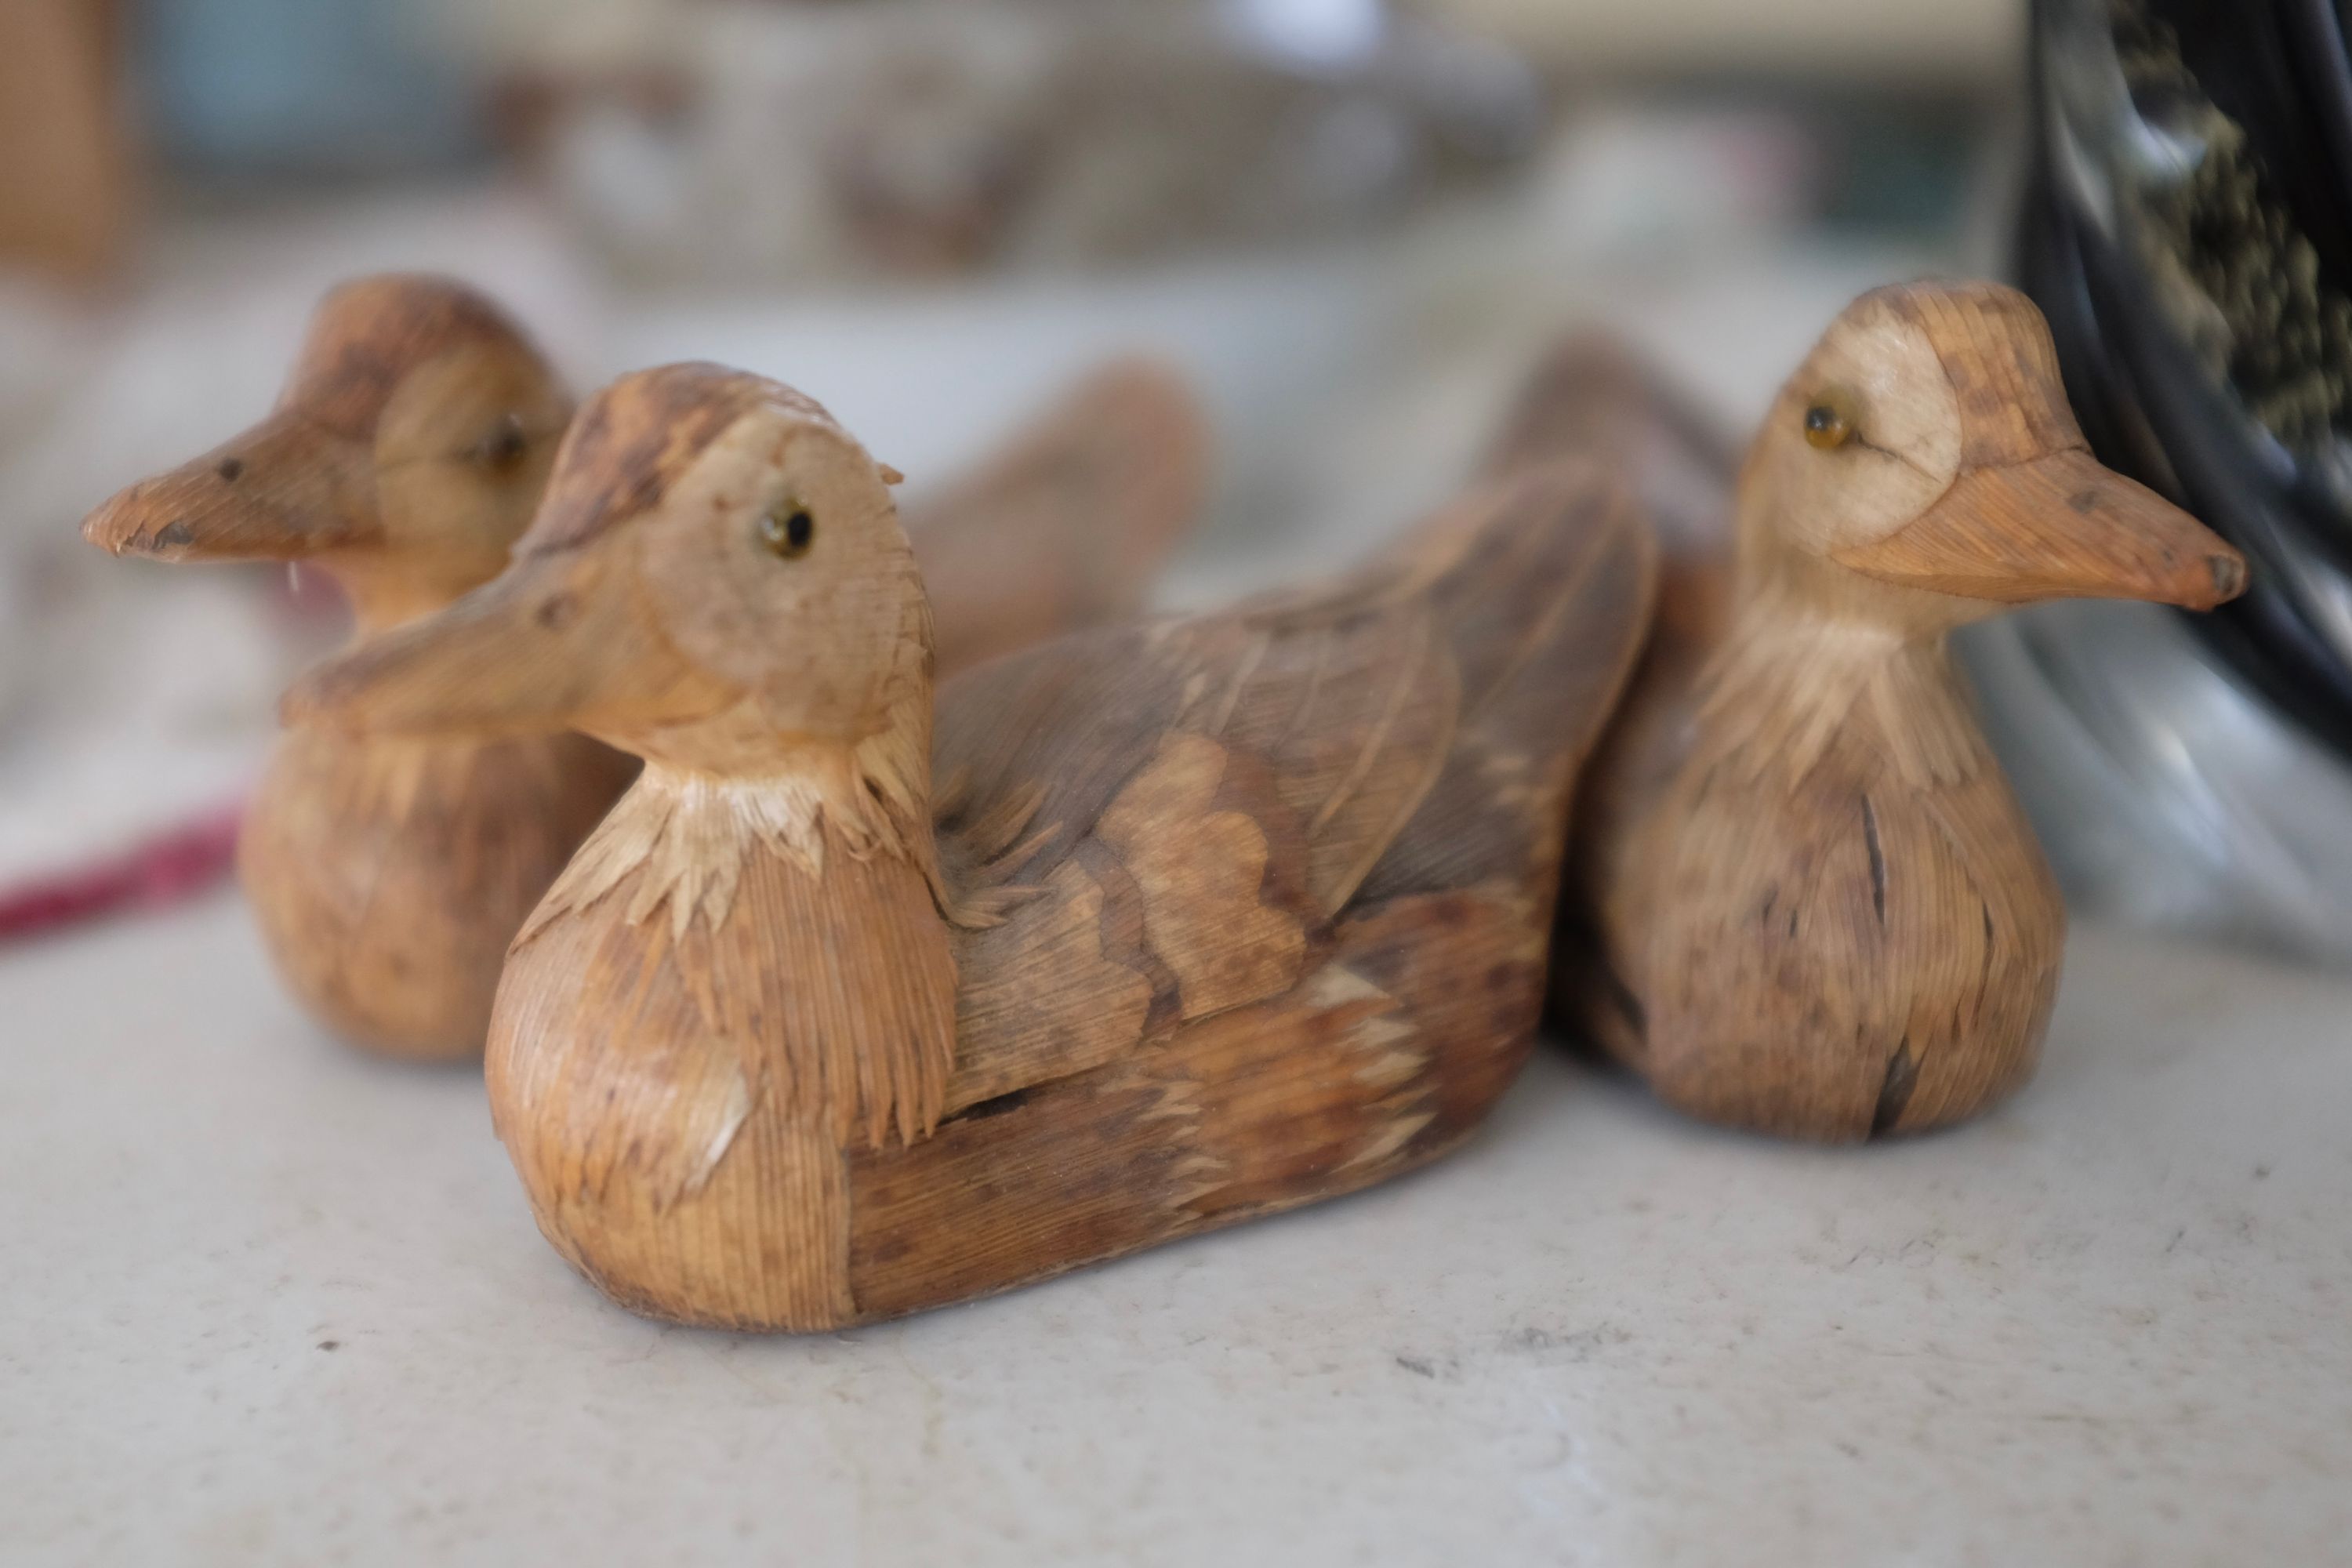 Three ducks made of tree bark on the shelf of a village shop.